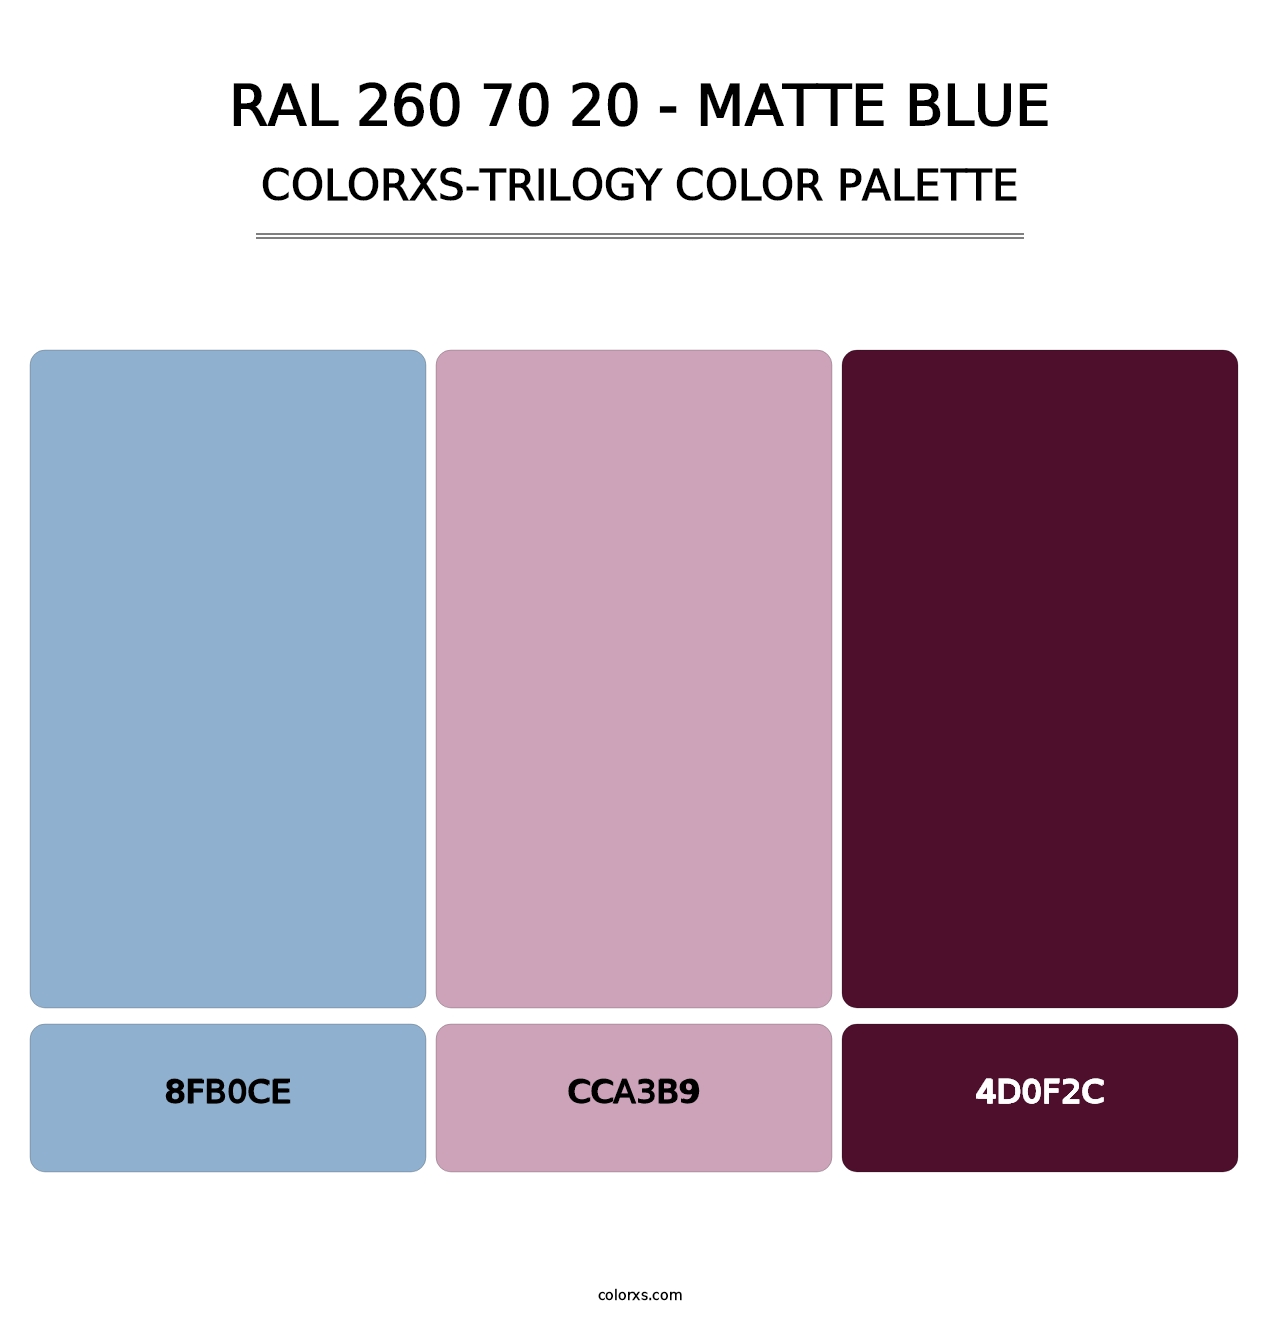 RAL 260 70 20 - Matte Blue - Colorxs Trilogy Palette